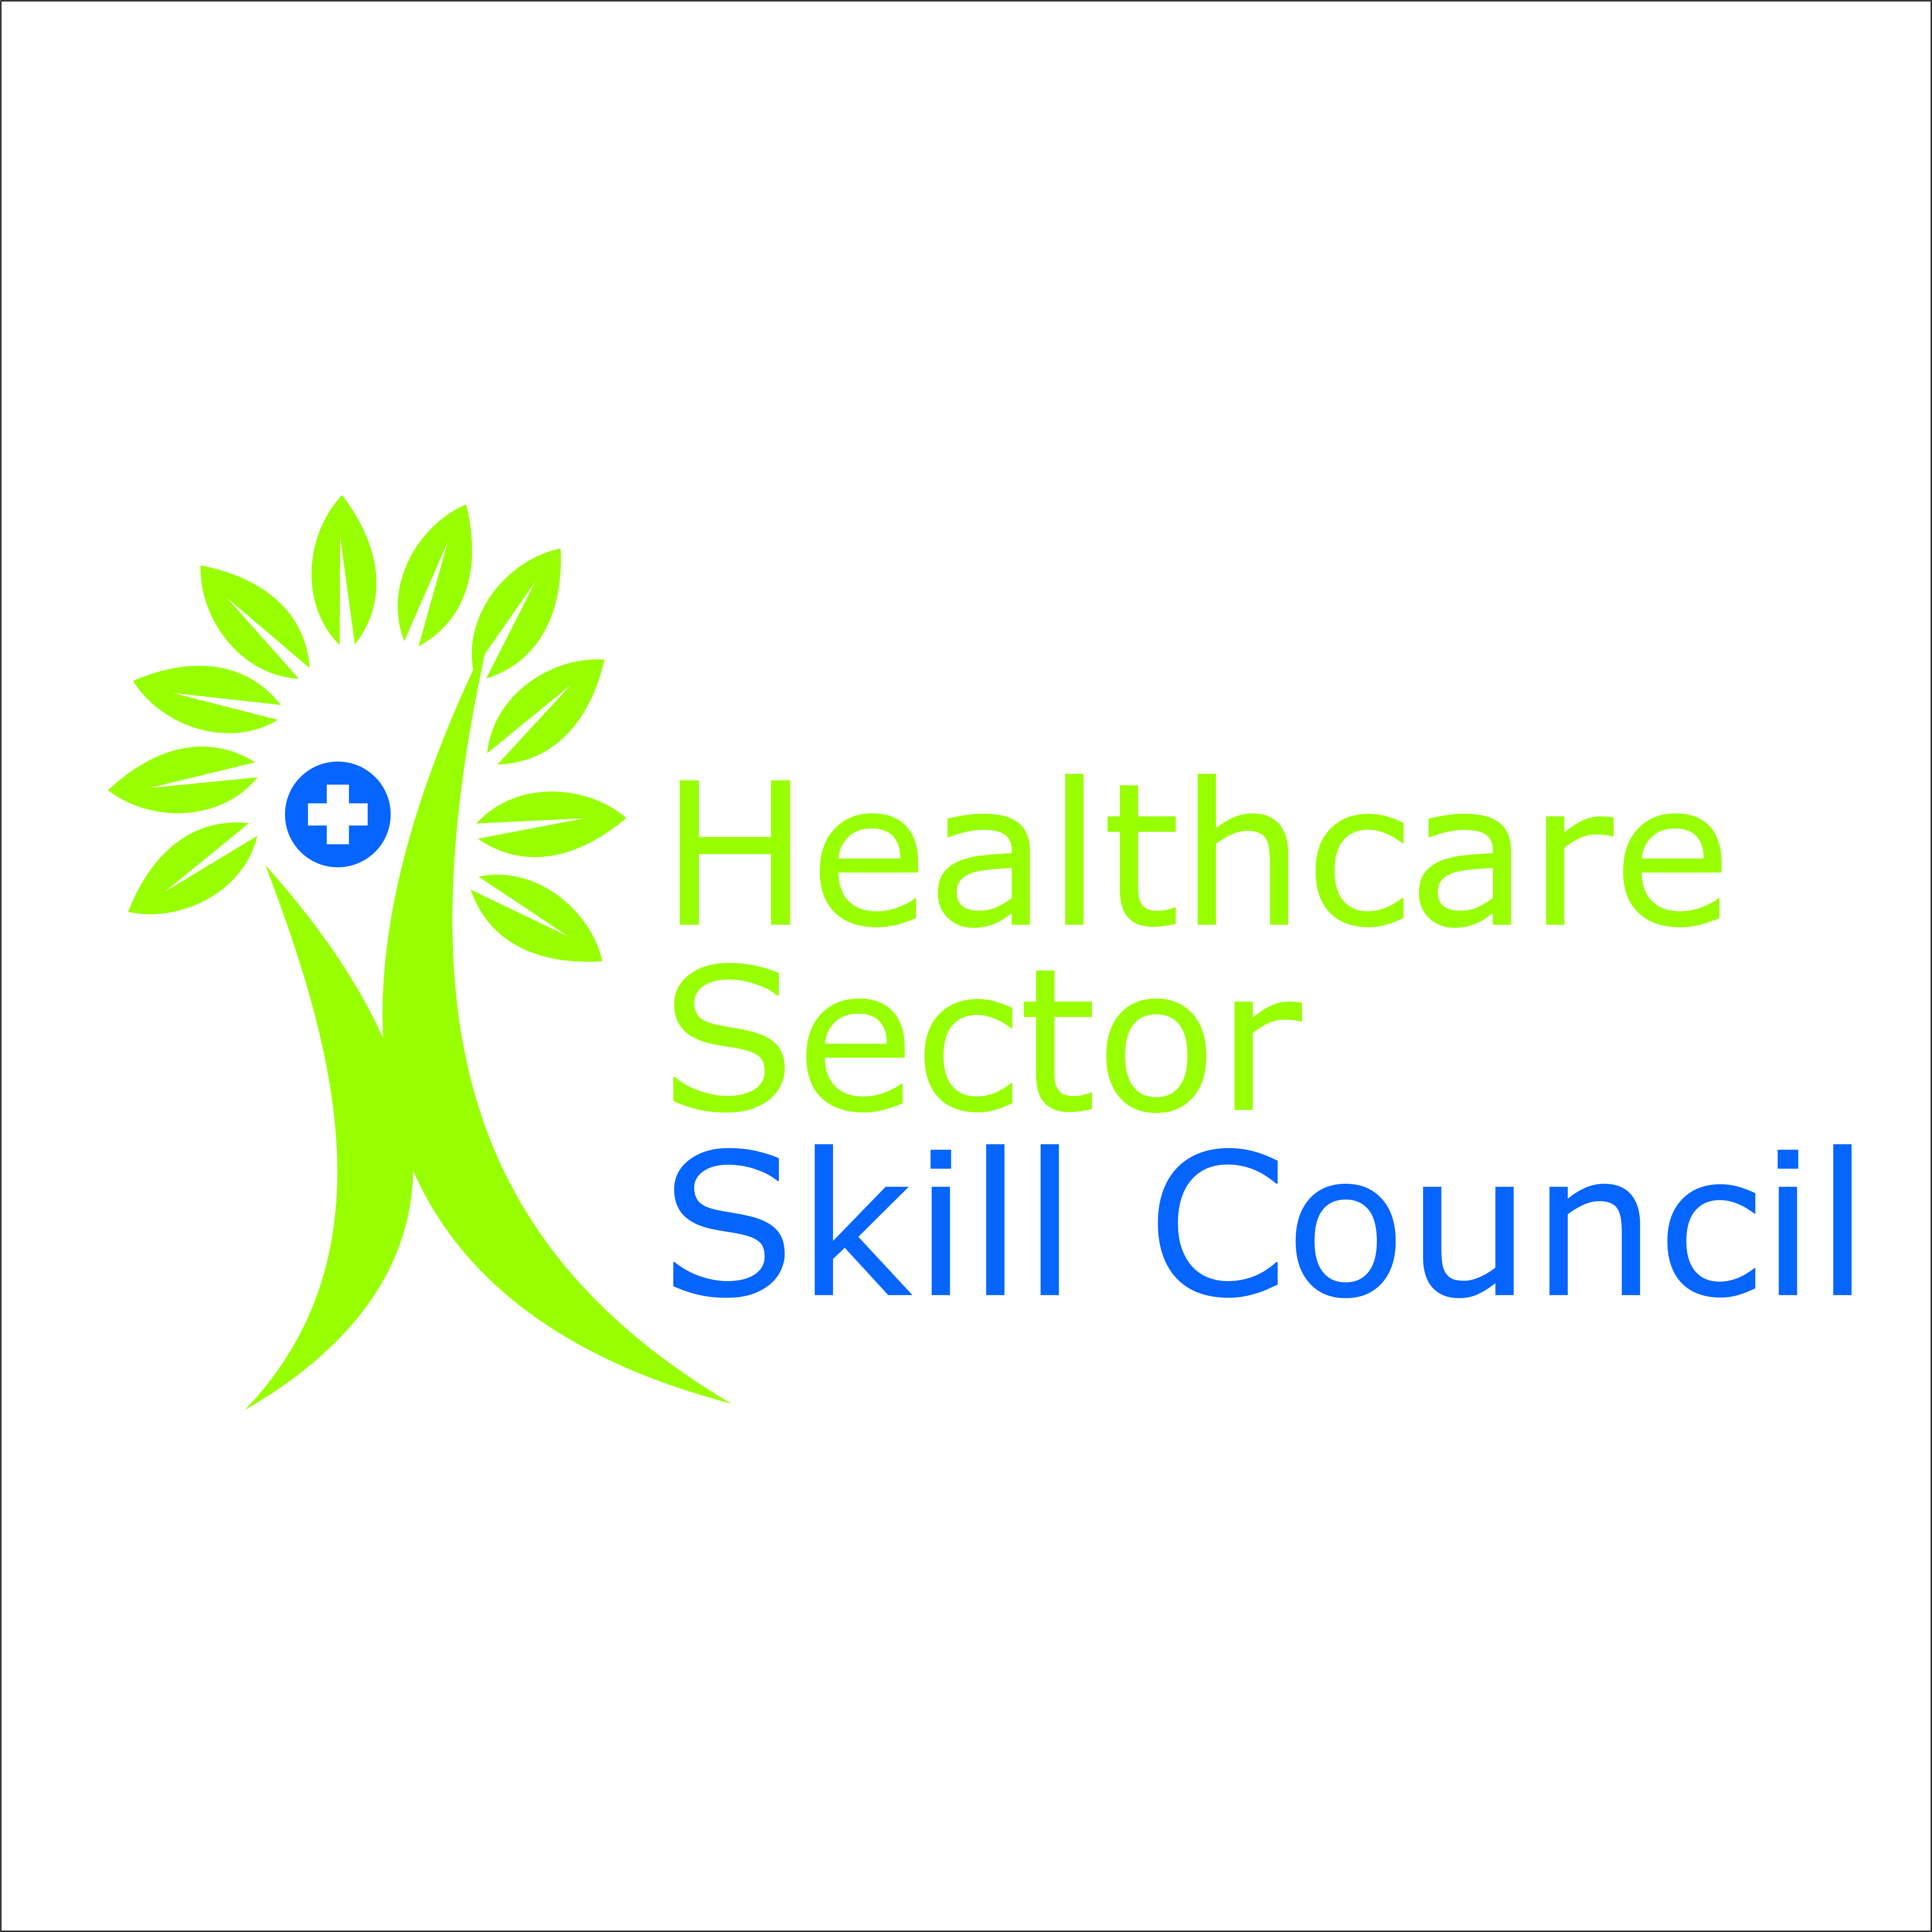 Healthcare Sector Skill Council